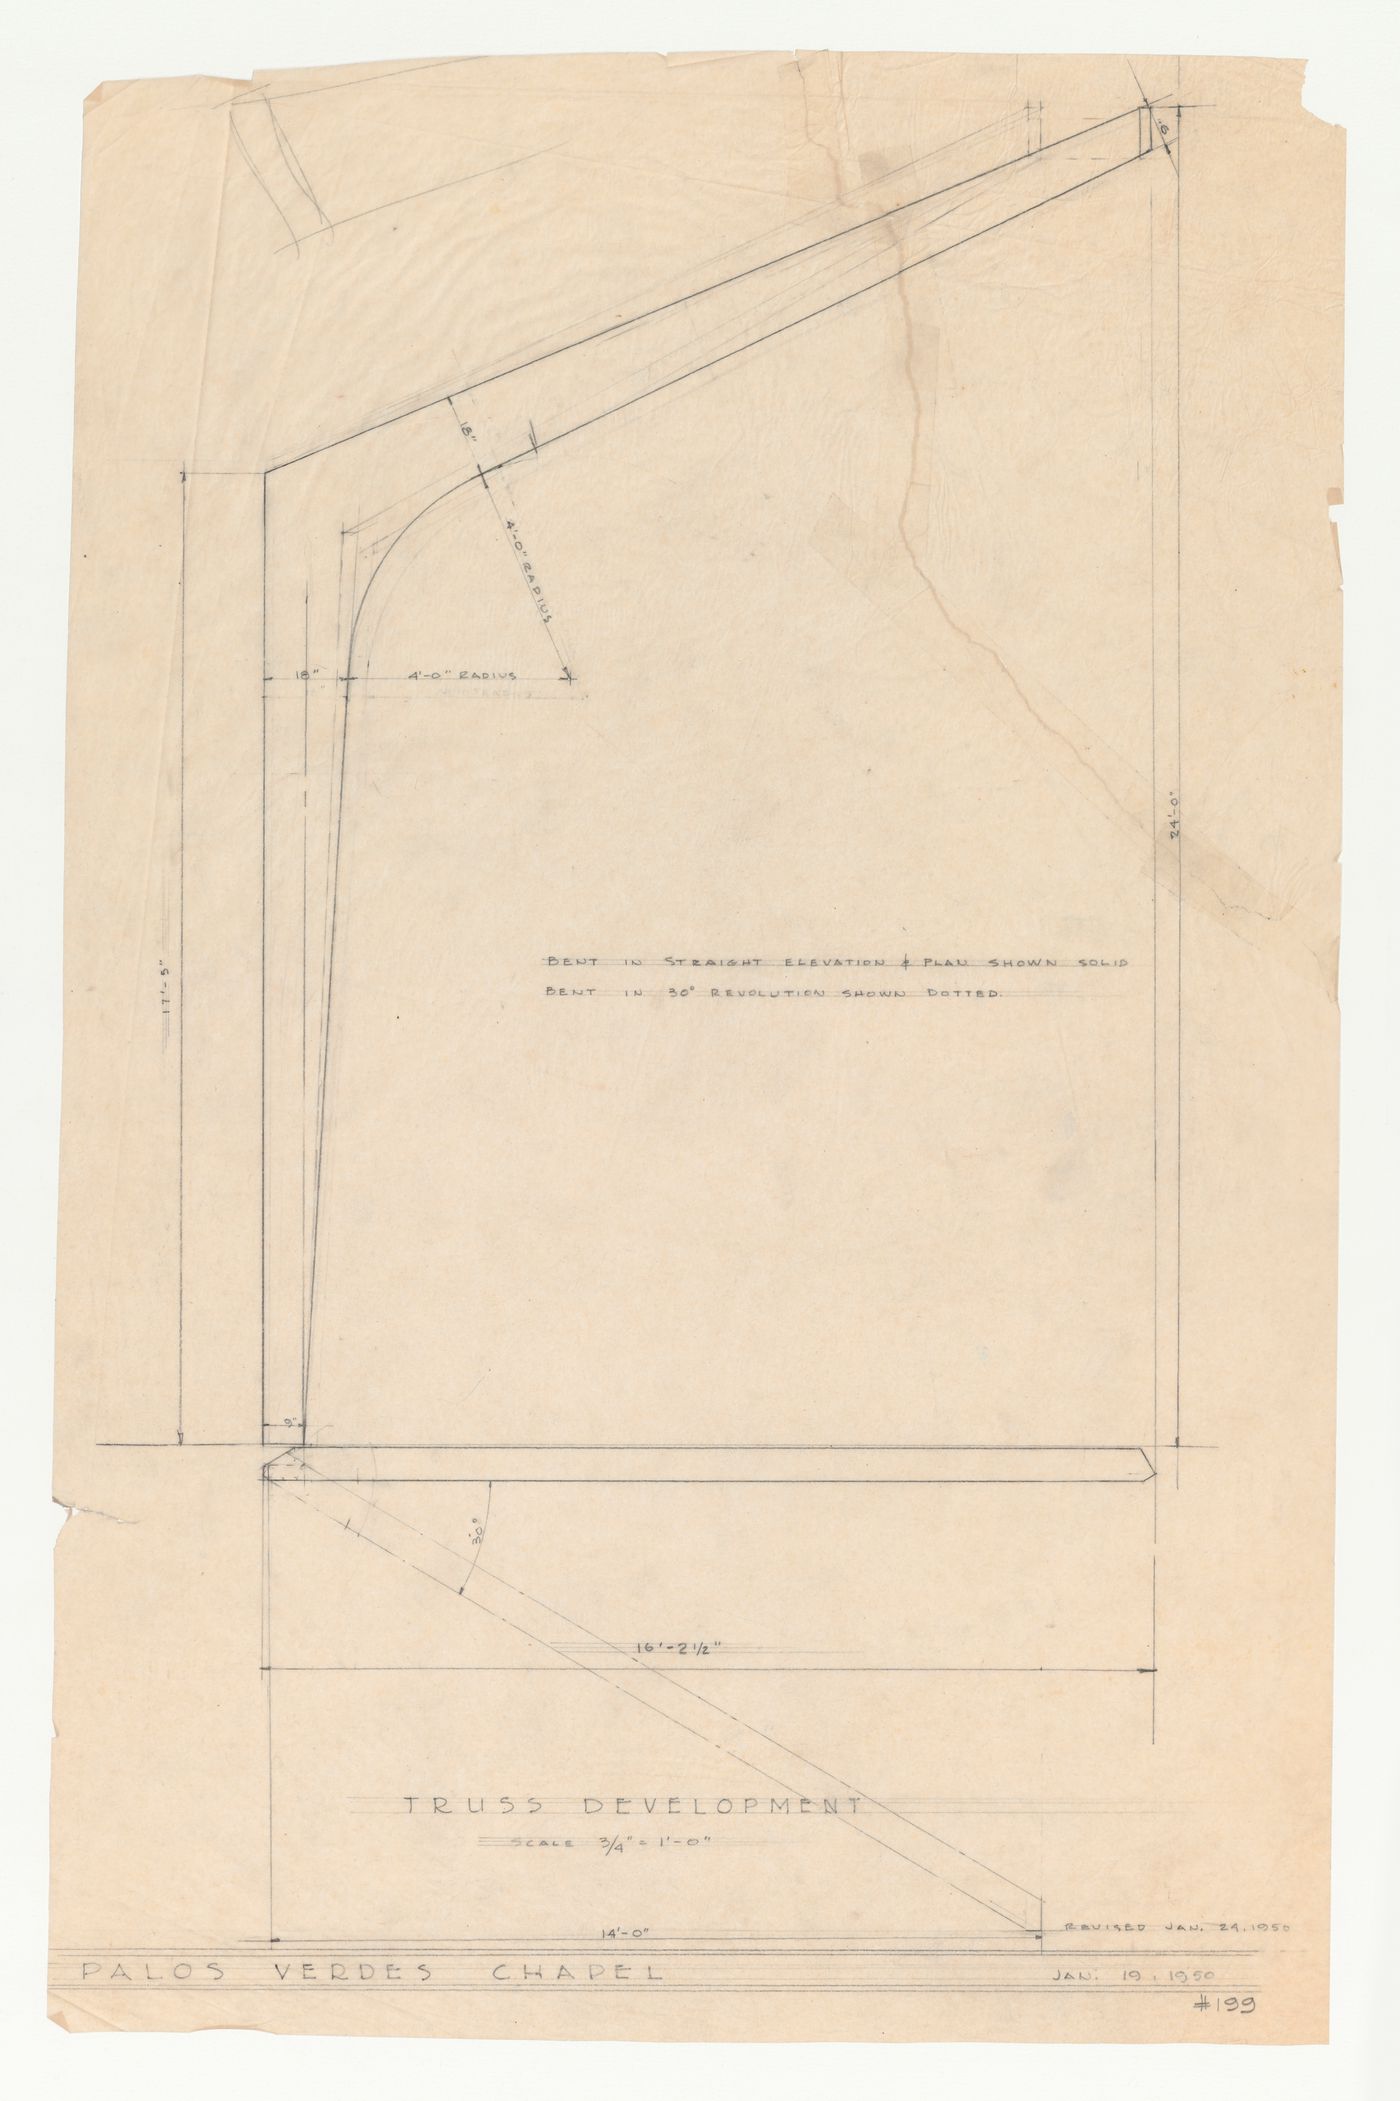 Wayfarers' Chapel, Palos Verdes, California: Elevation and plan for chapel trusses